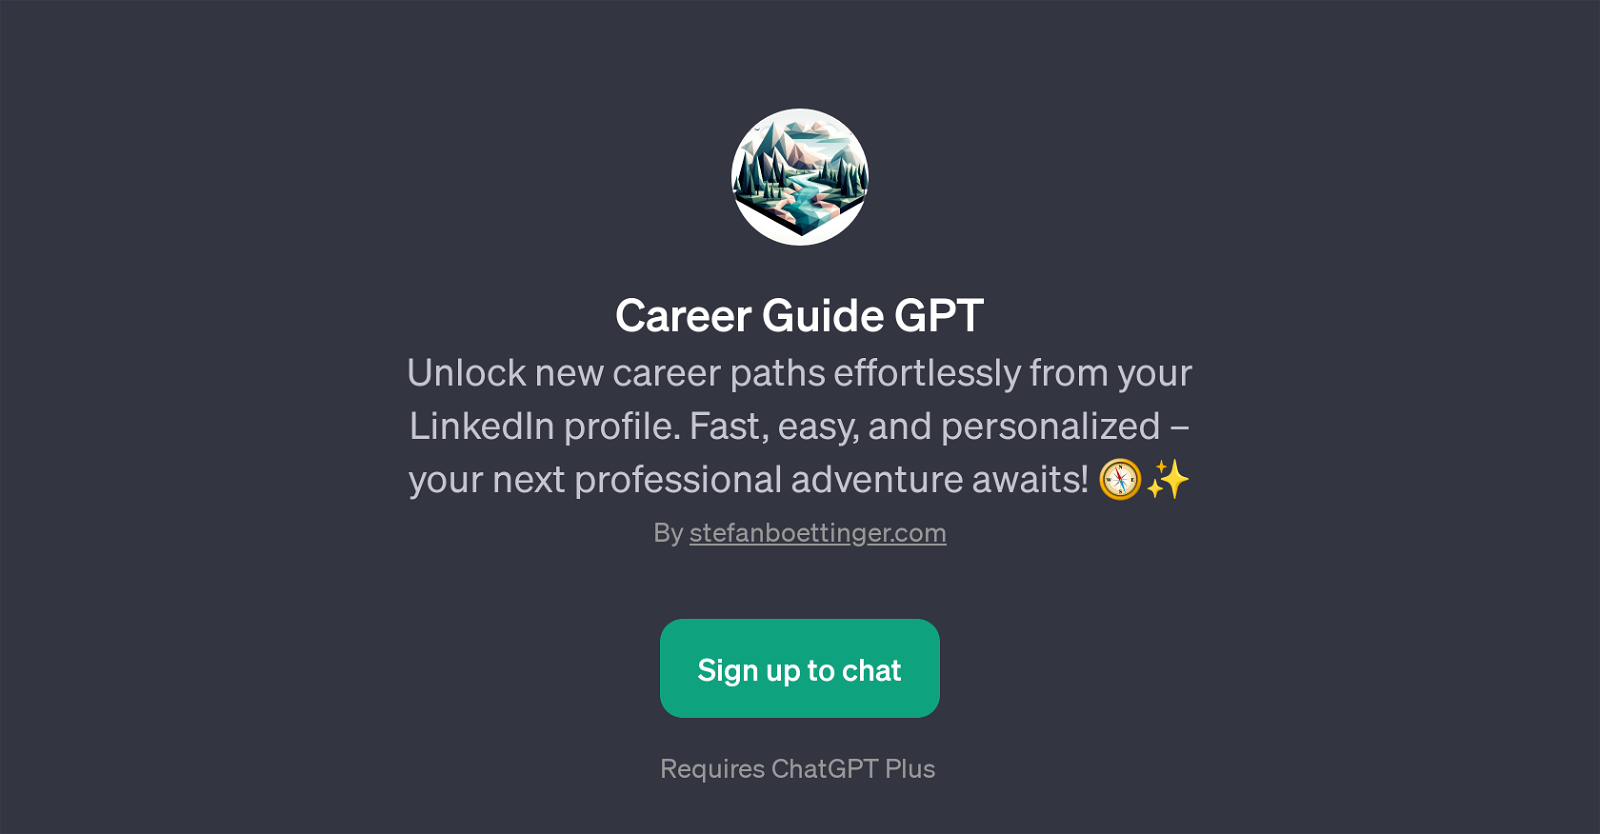 Career Guide GPT website